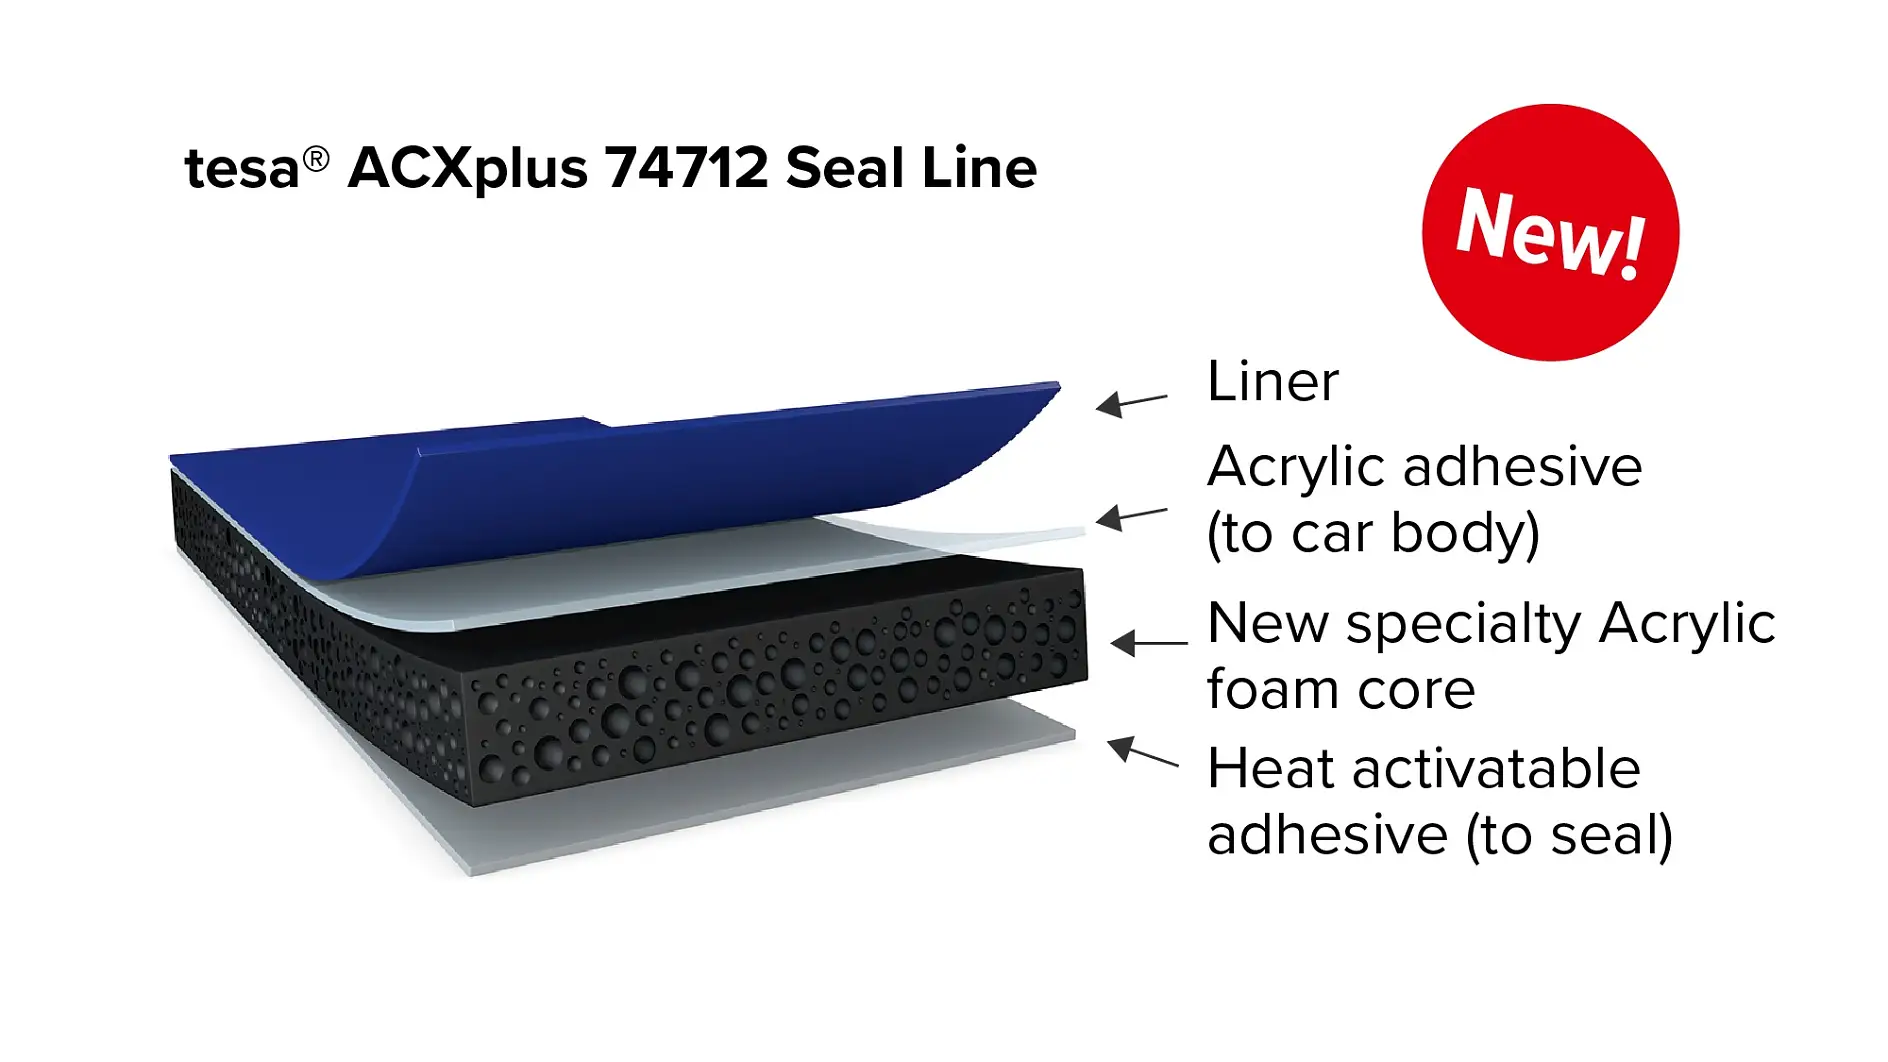 tesa® ACXplus 74712 Seal Line - Product design